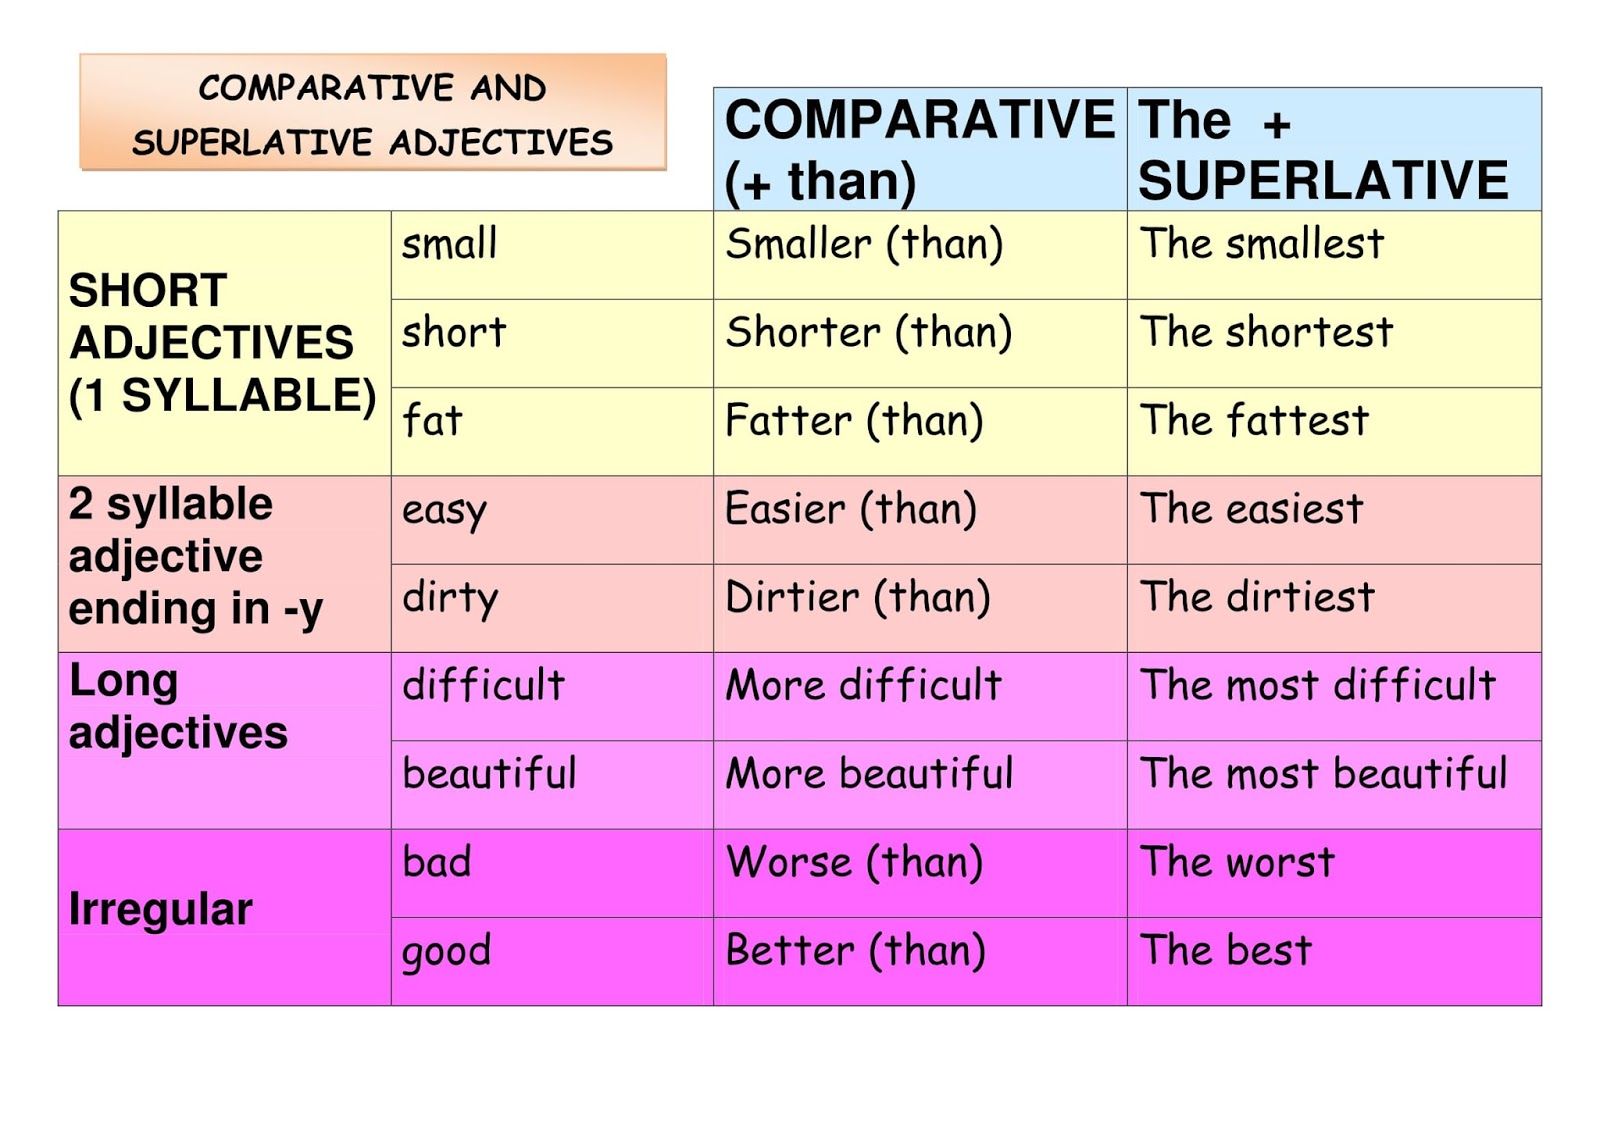 Adjective comparative superlative easy. Superlative adjectives правило. Таблица Comparative and Superlative. Comparative and Superlative forms of adjectives. Comparative and Superlative adjectives правило.